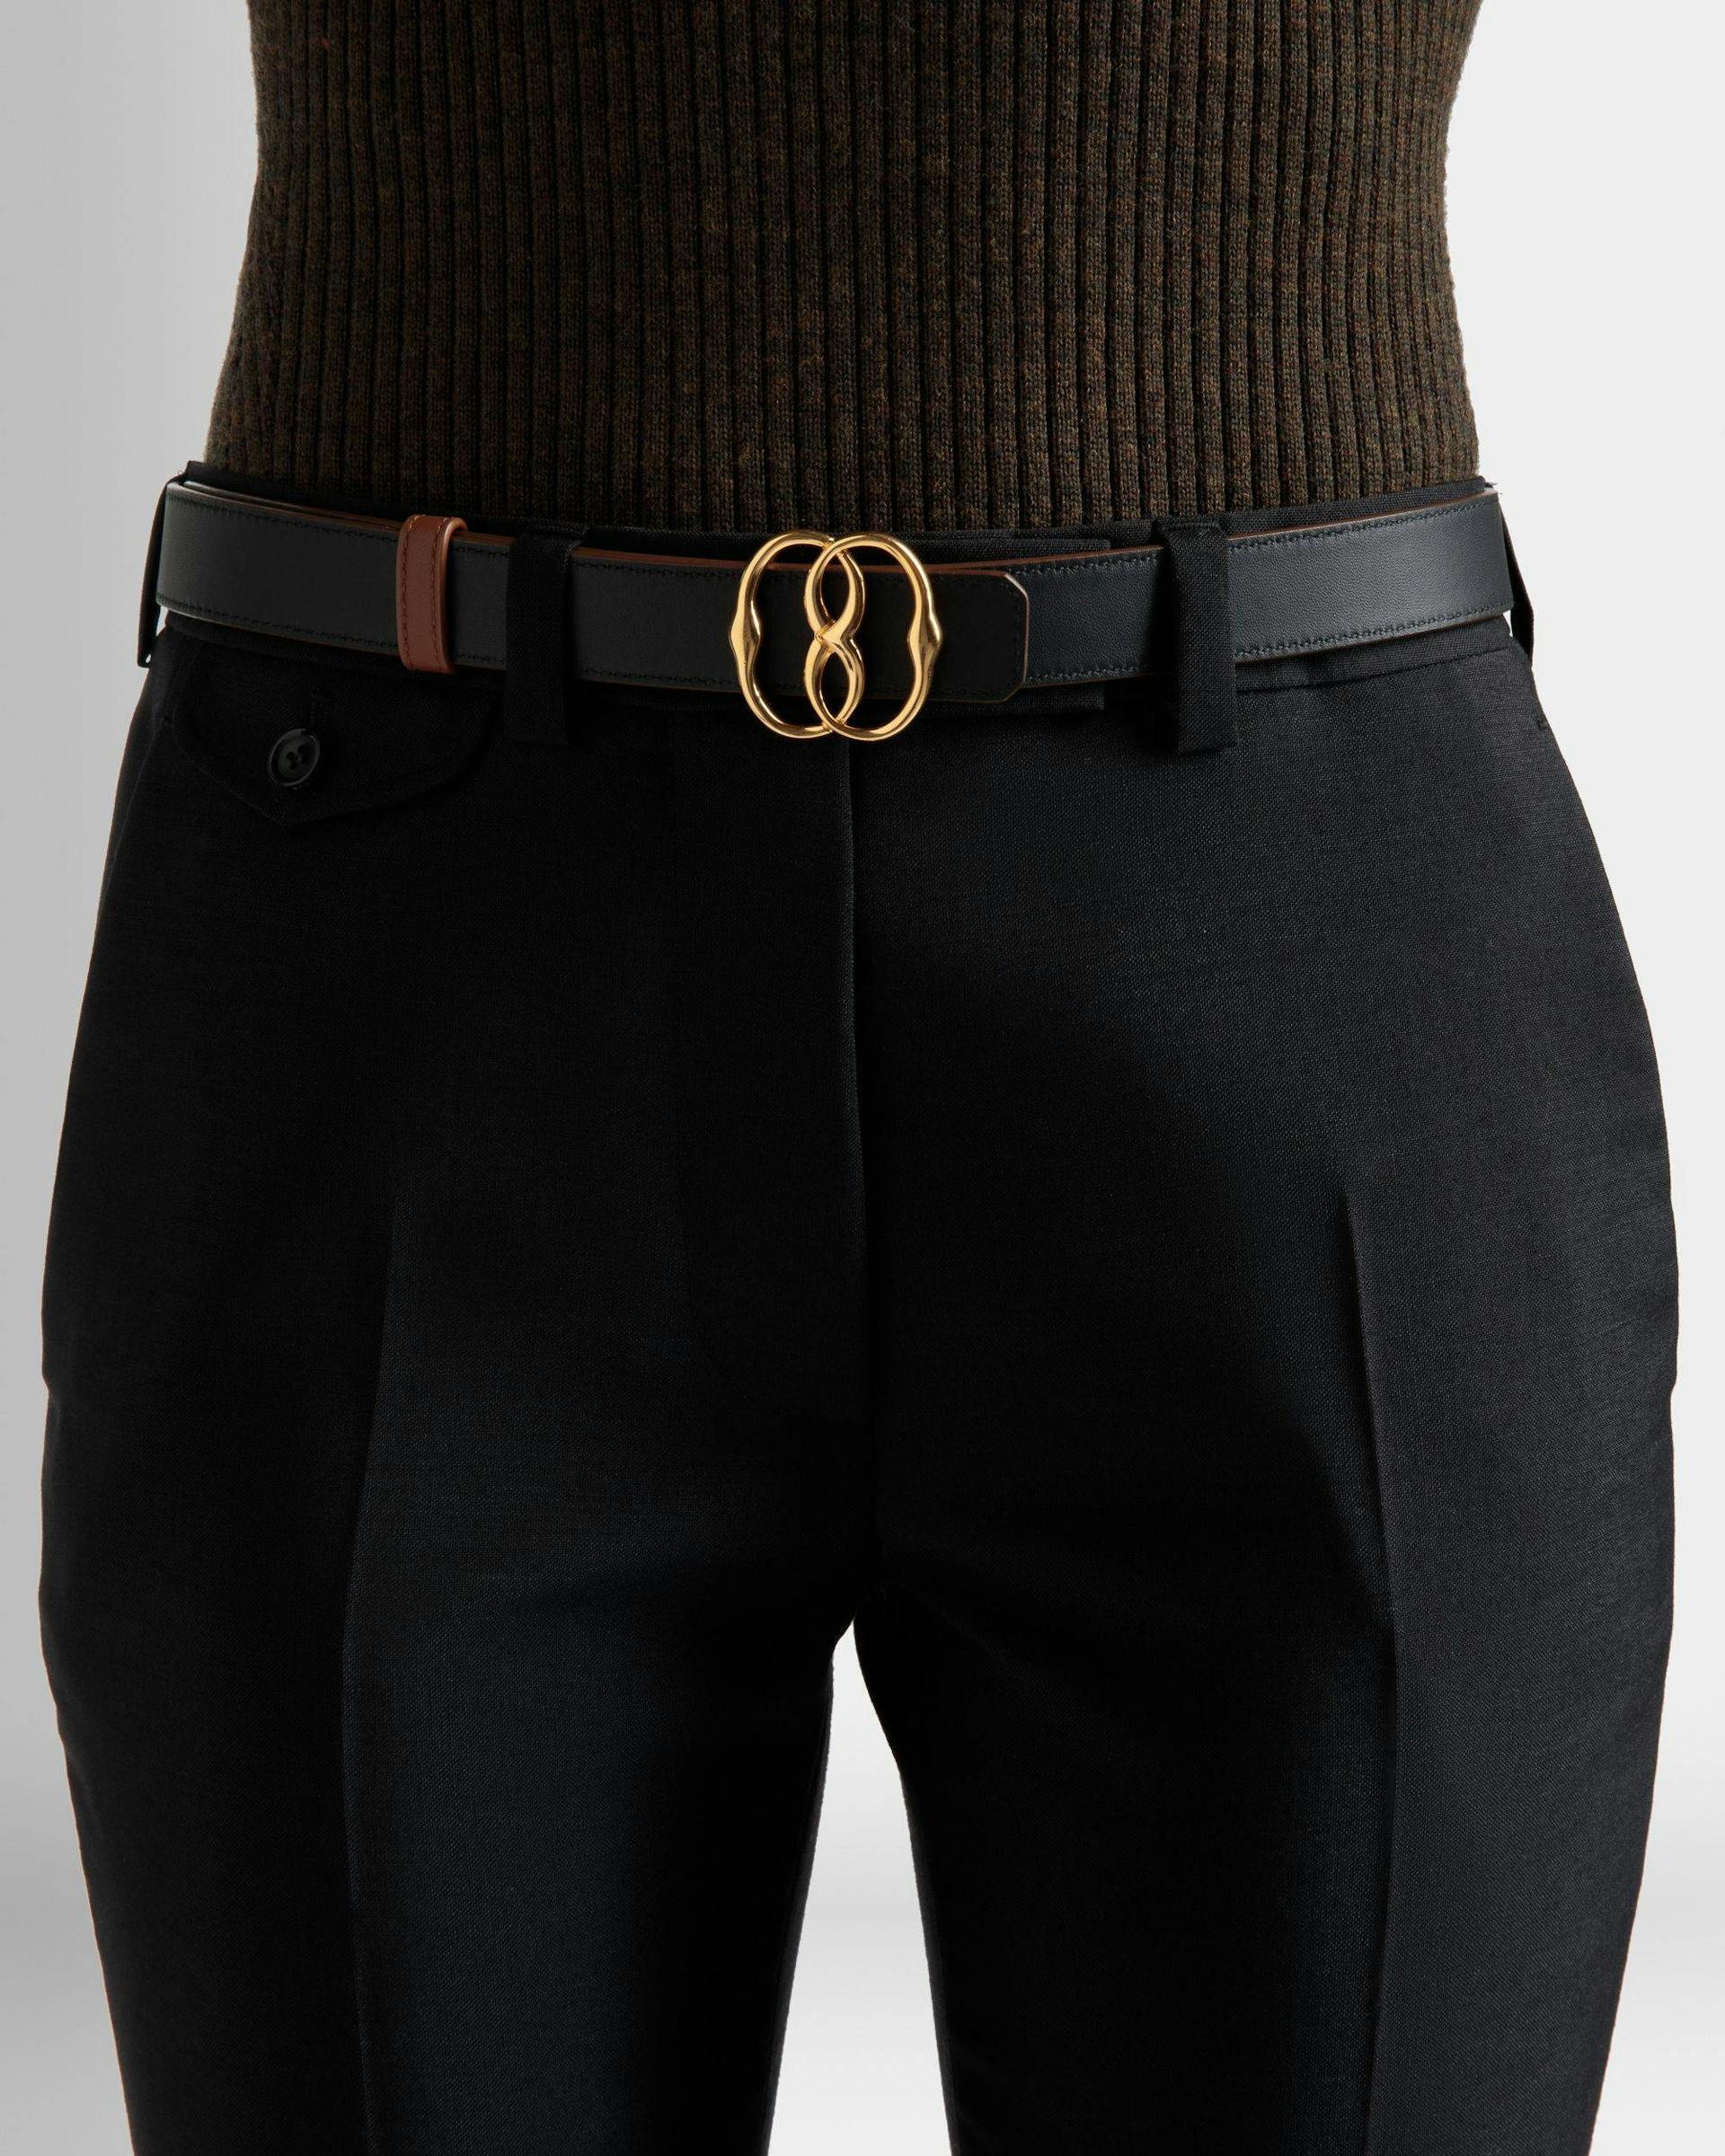 Emblem 25mm Belt In Brown Leather - Women's - Bally - 03